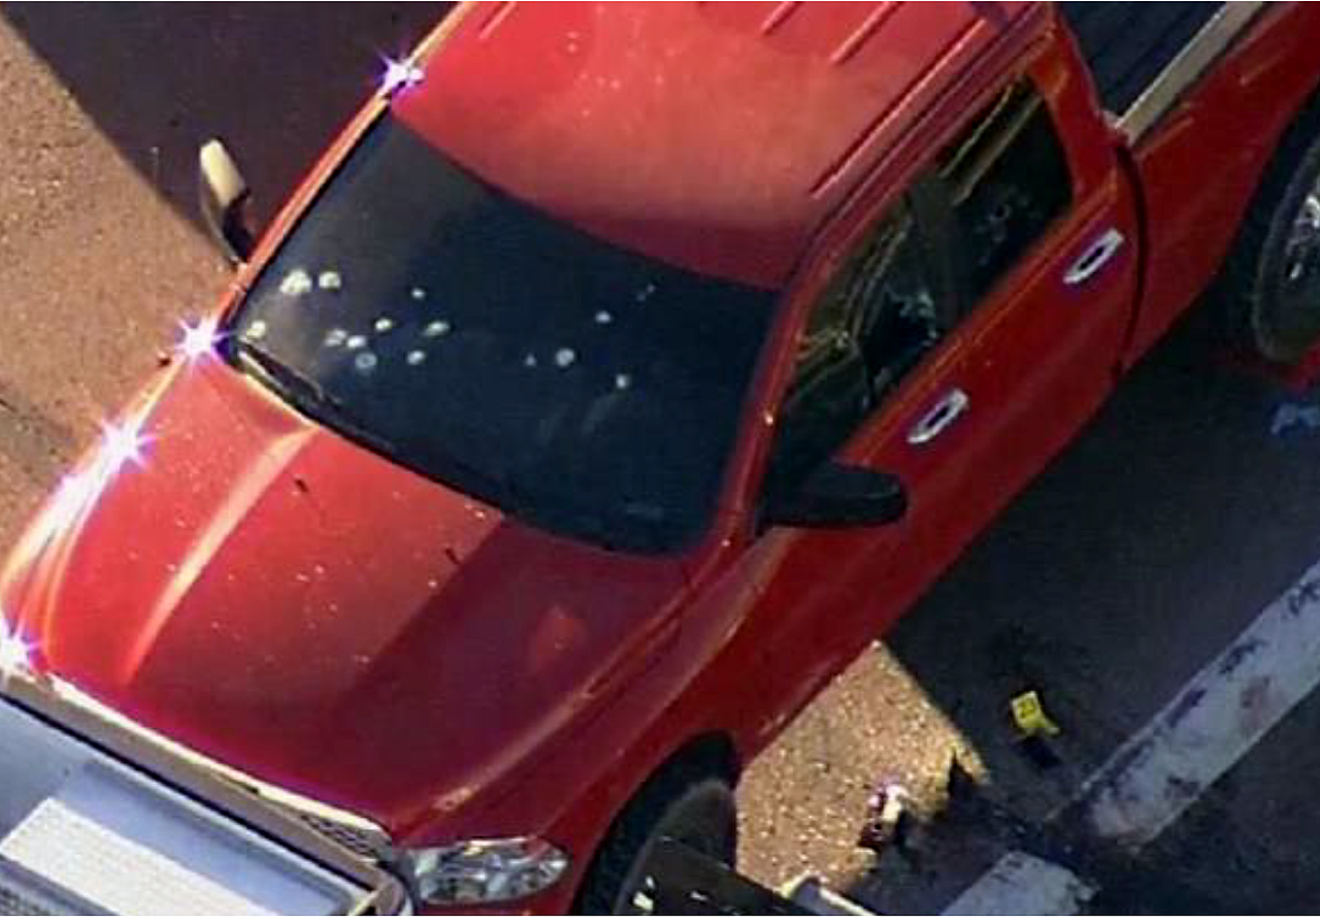 Duval's bullet-ridden truck after law enforcement allegedly shot her during a traffic stop last summer.